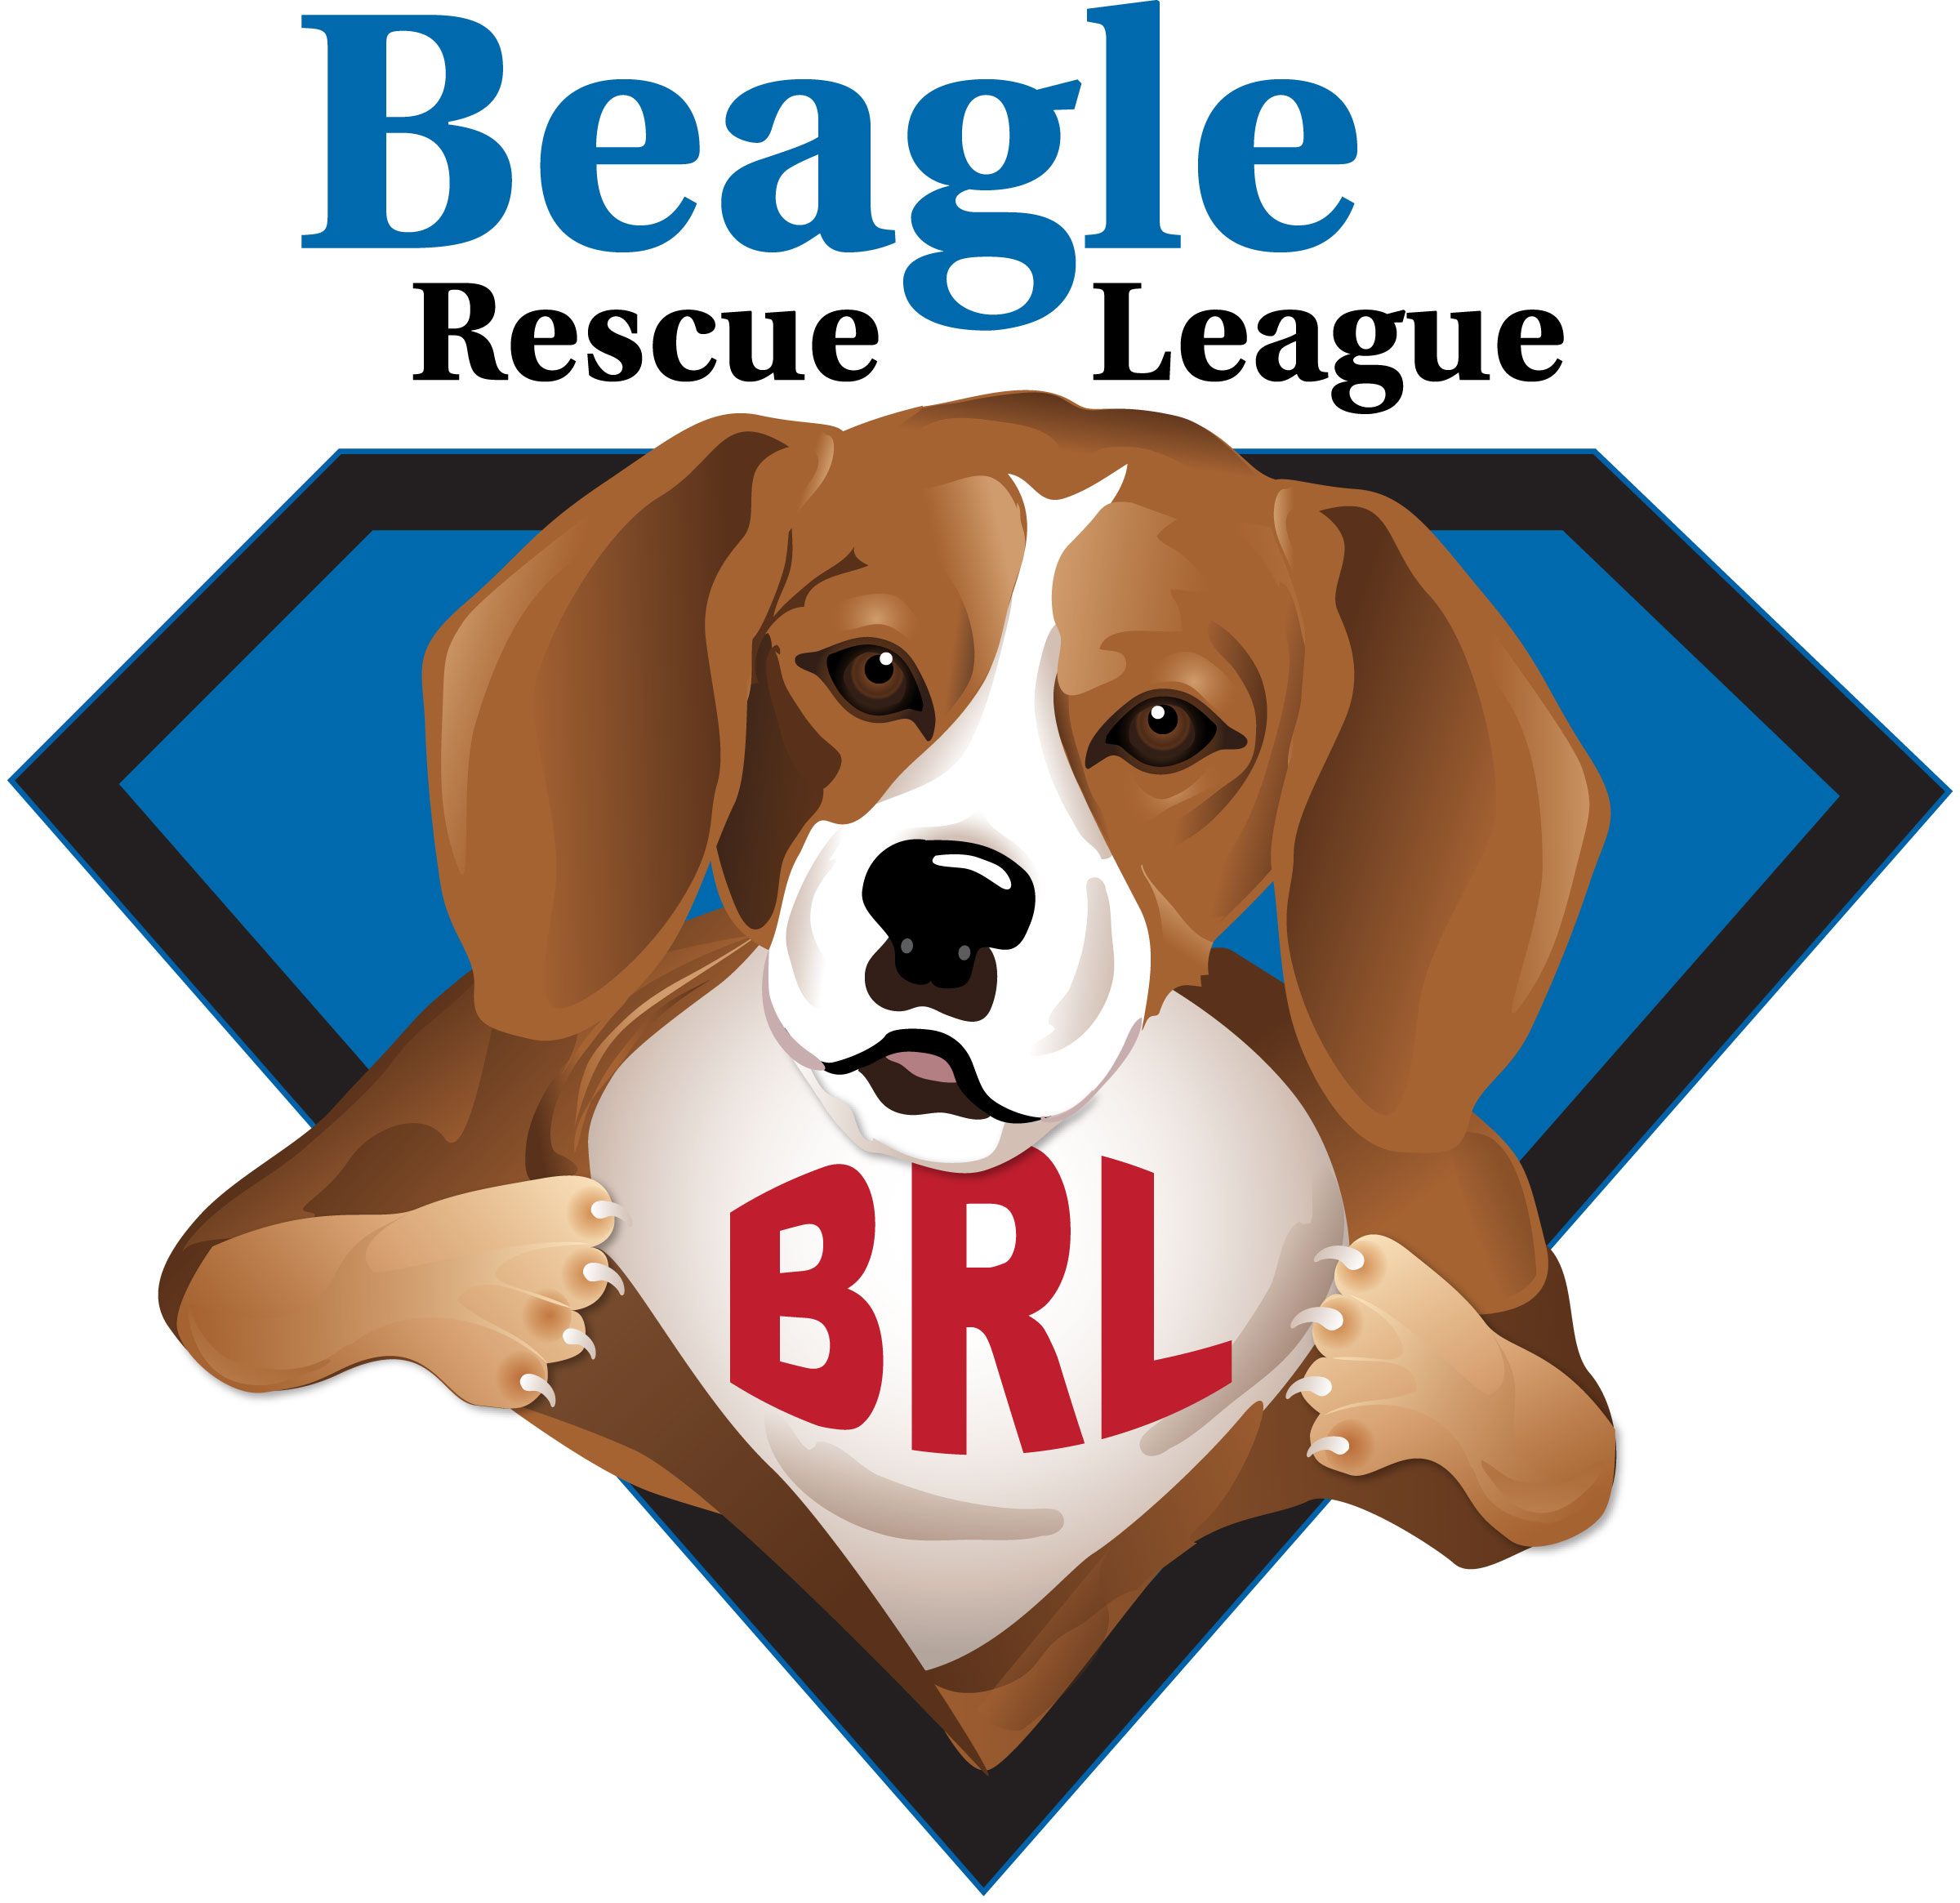 Beagle Rescue League logo